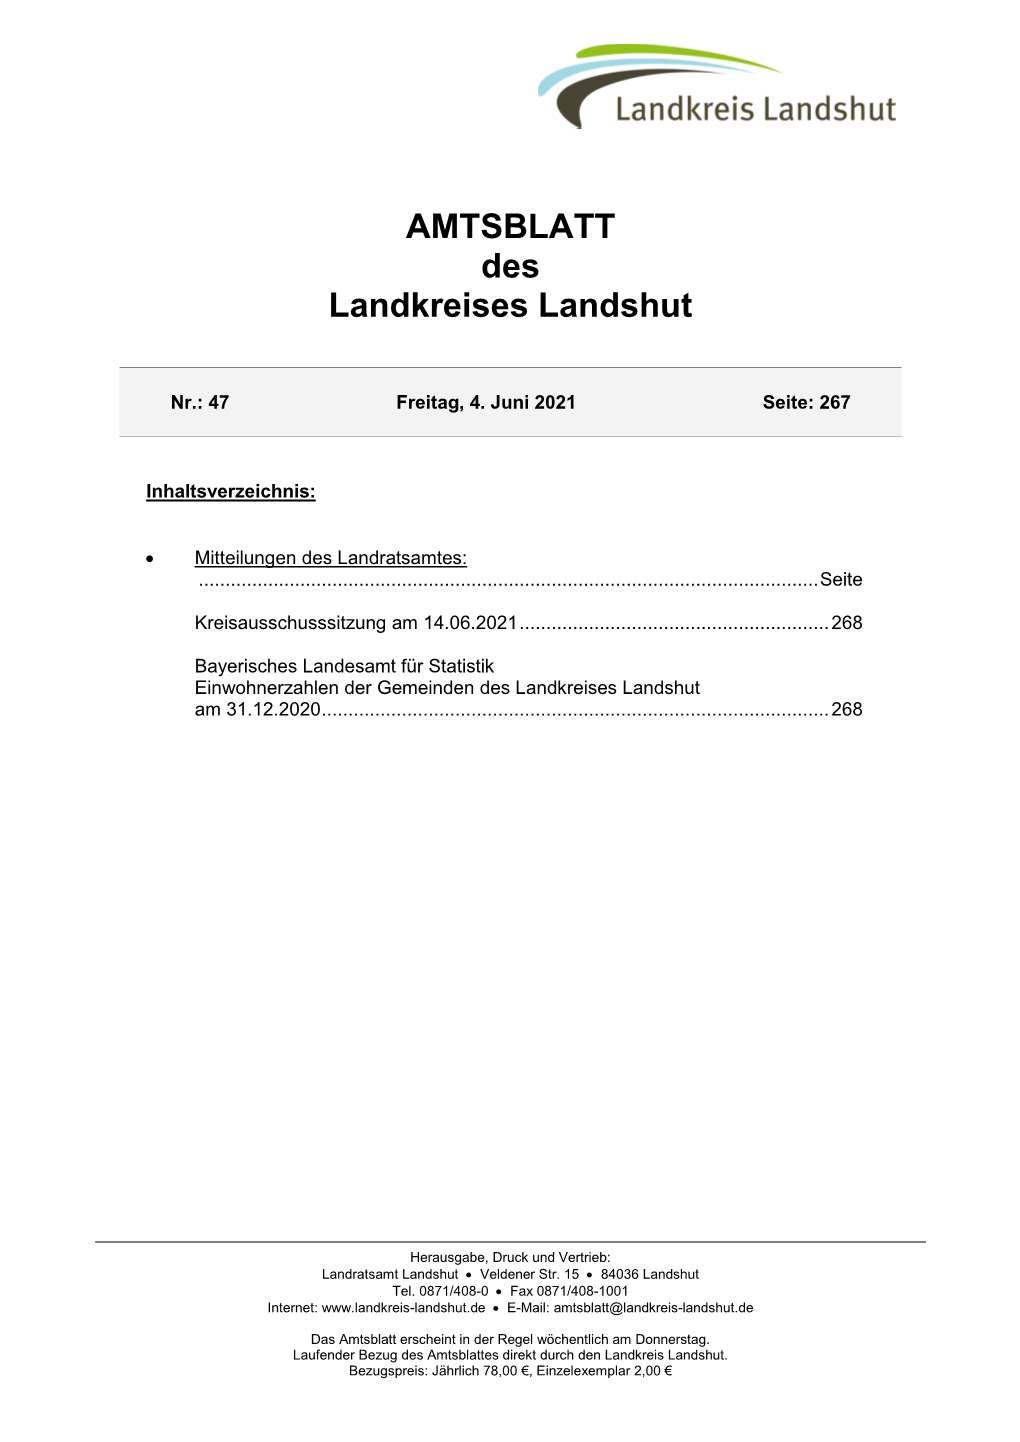 AMTSBLATT Des Landkreises Landshut